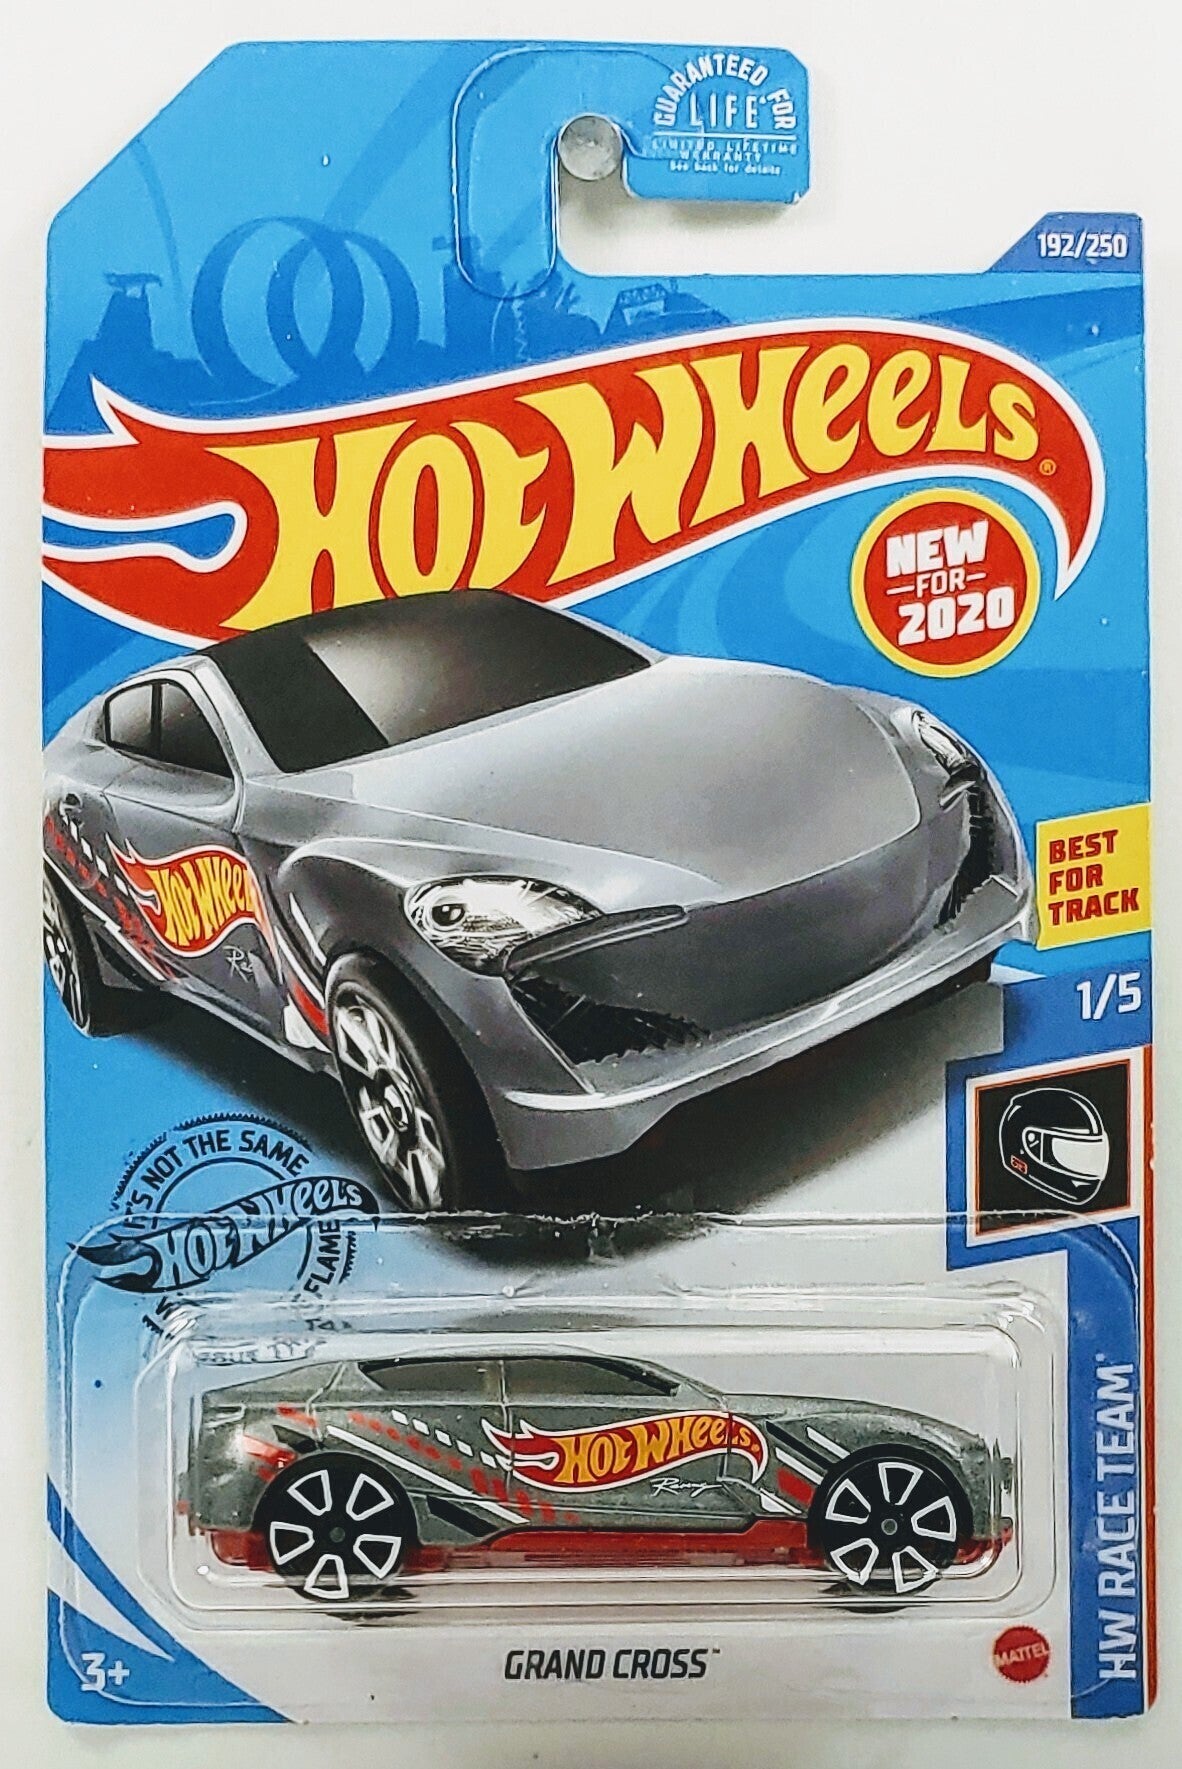 Hot Wheels 2020 - Collector # 192/250 - HW Race Team 1/5 - New Models - Grand Cross - Metallic Gray